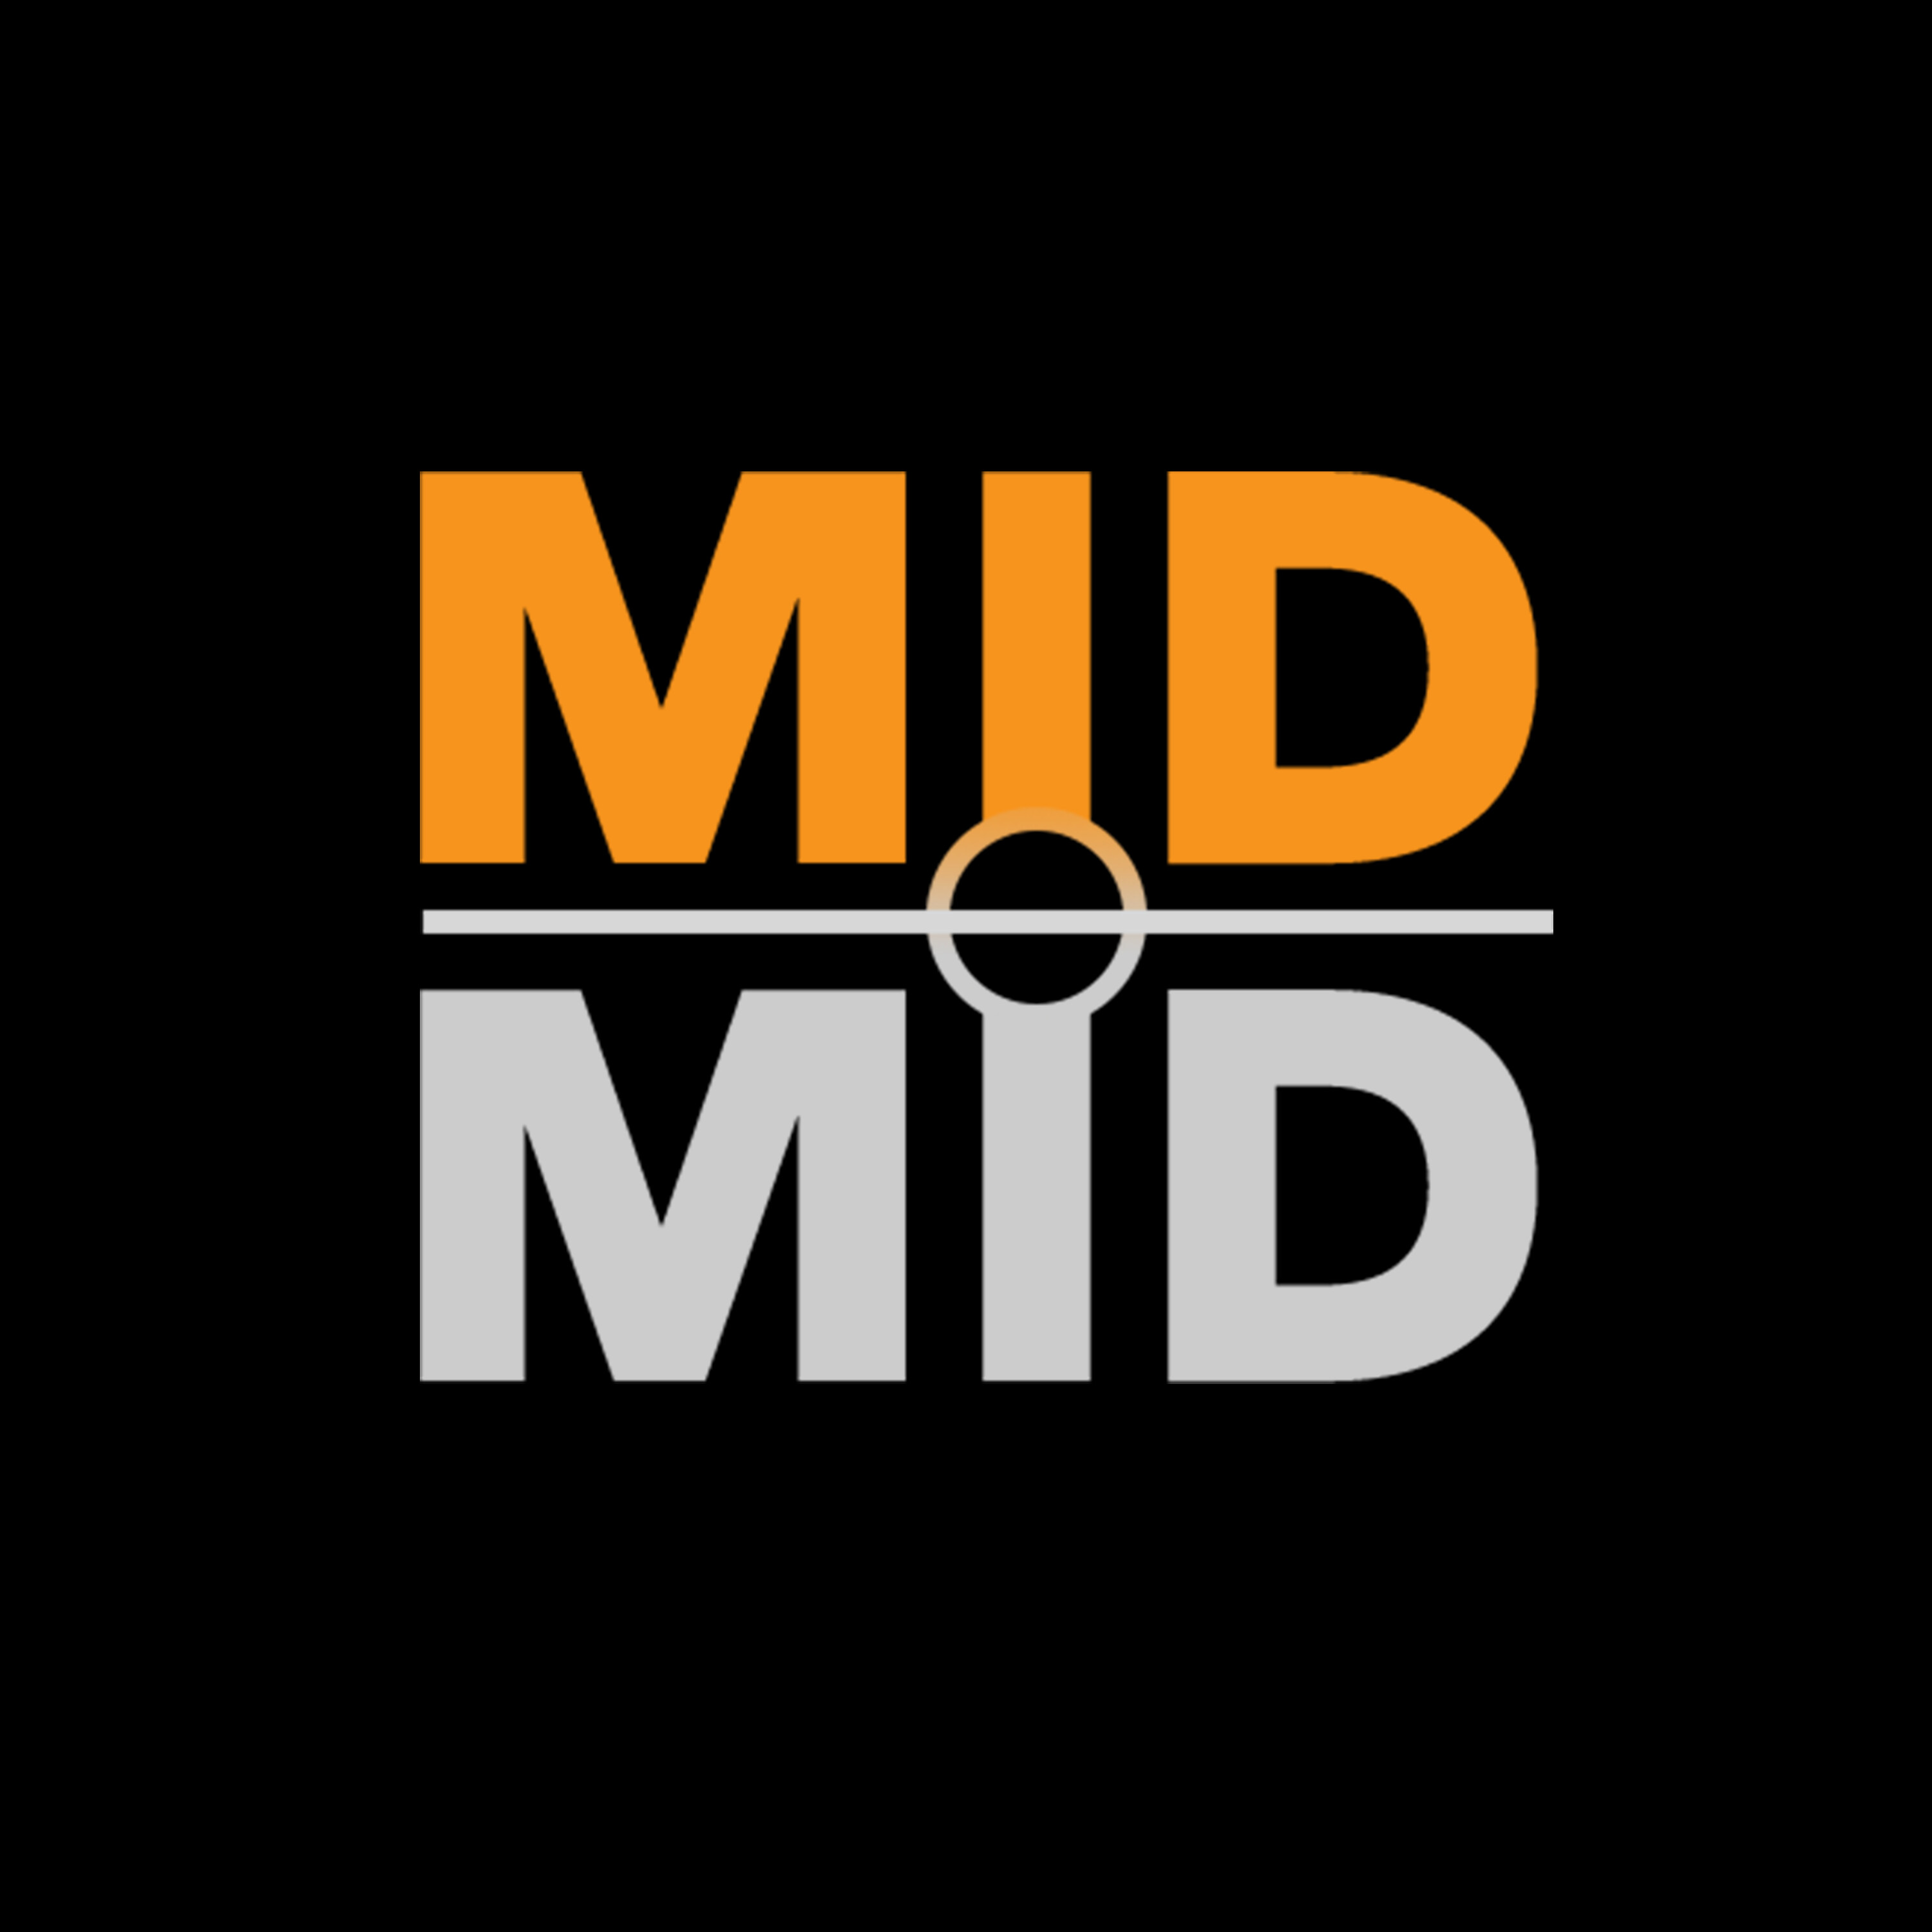 MIDMID - Kerstspecial: kruisbestuiving in voetbalpodcastland